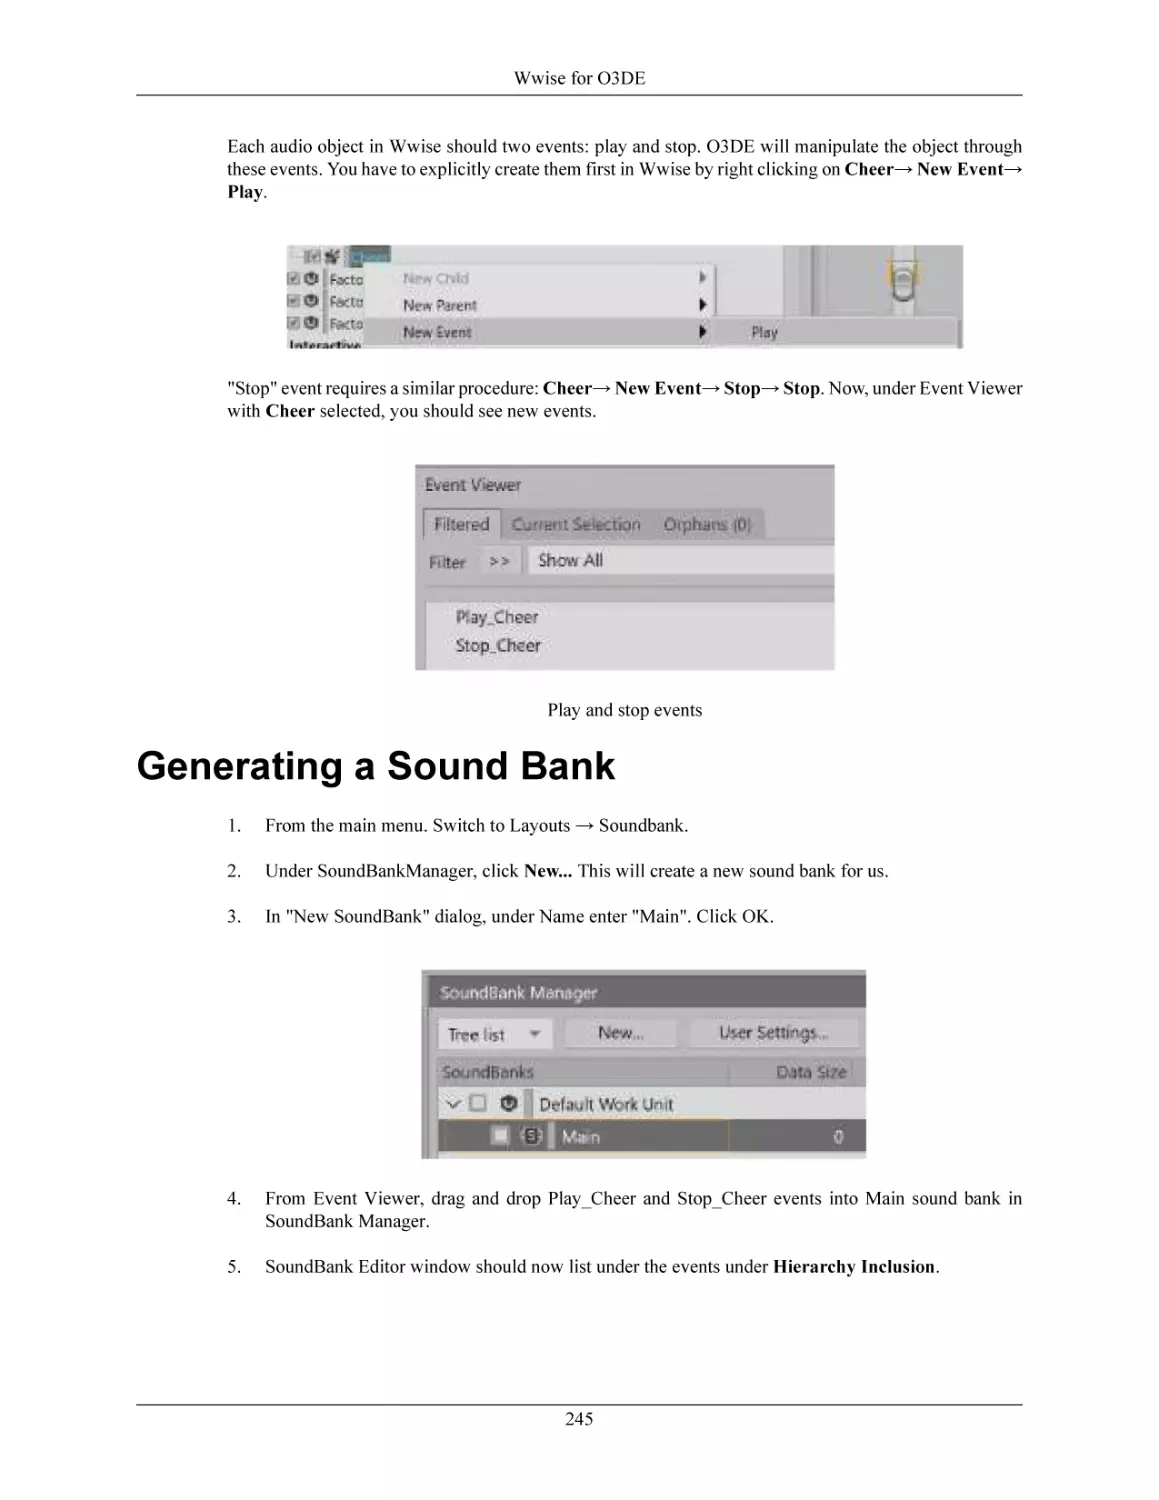 Generating a Sound Bank